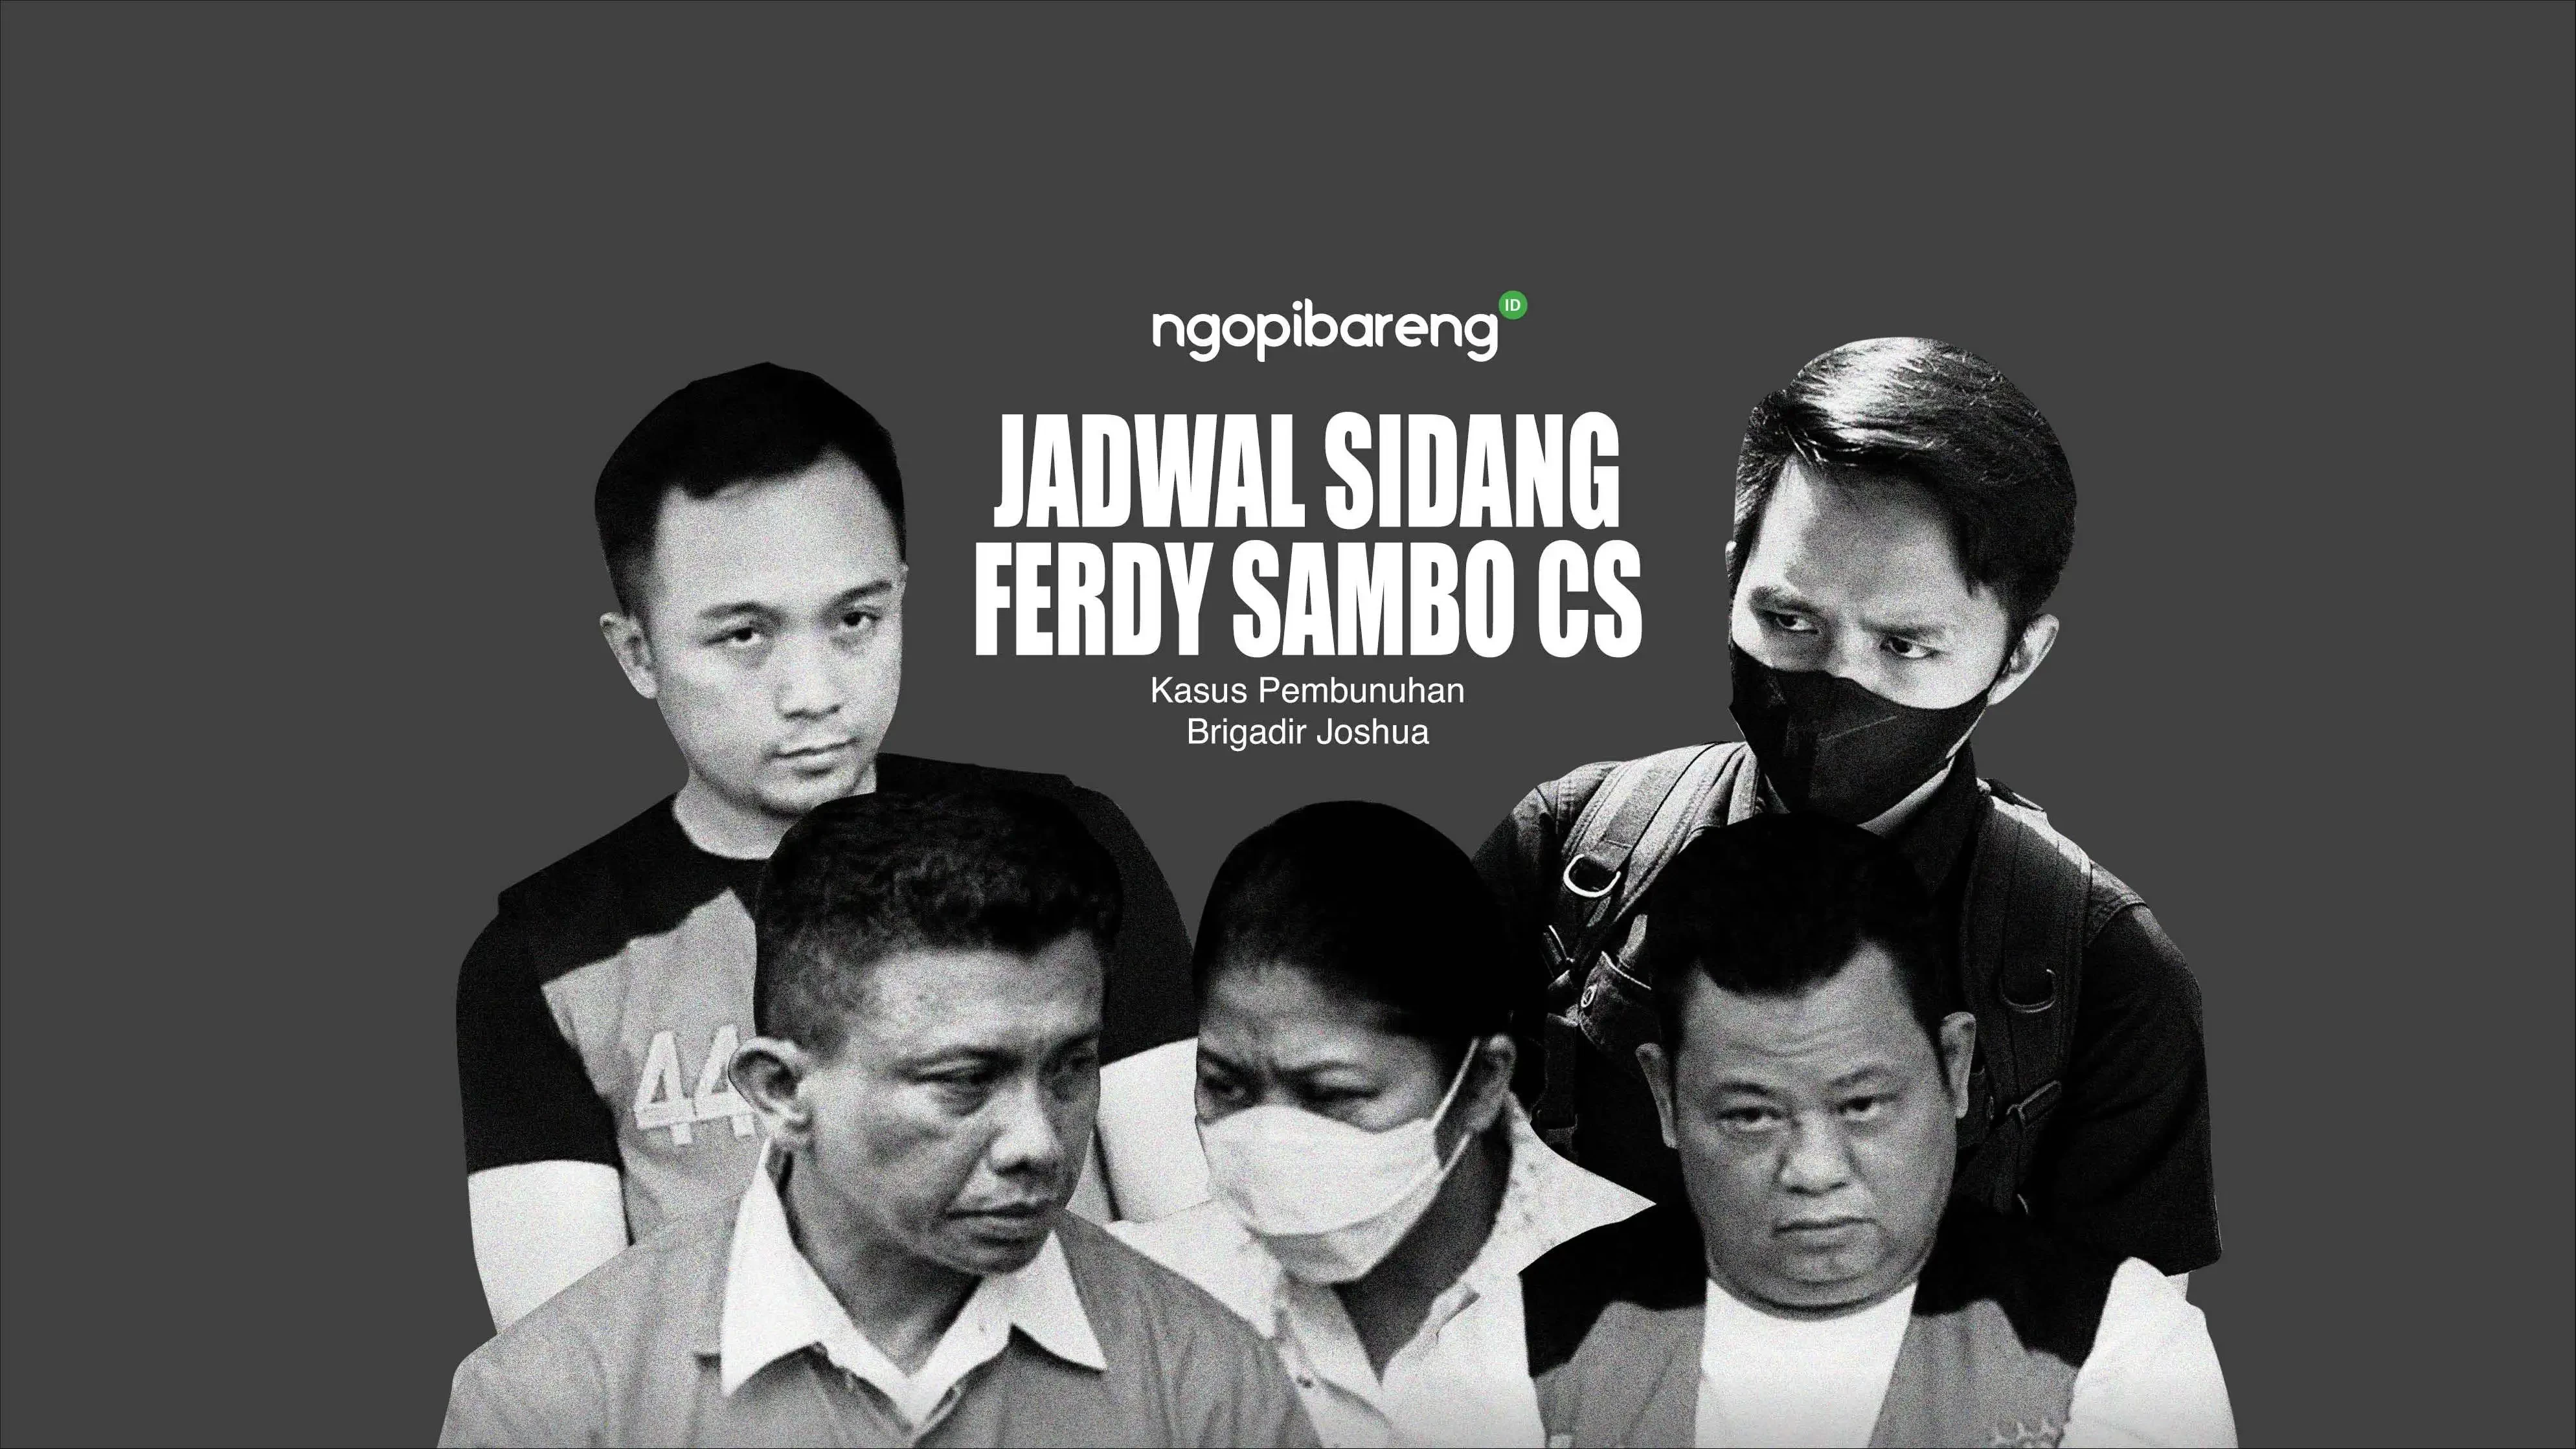 Pengadilan Negeri Jakarta Selatan (PN Jaksel) sudah menyusun jadwal sidang Ferdy Sambo Cs. (Ilustrasi: Fa Vidhi/Ngopibareng.id)